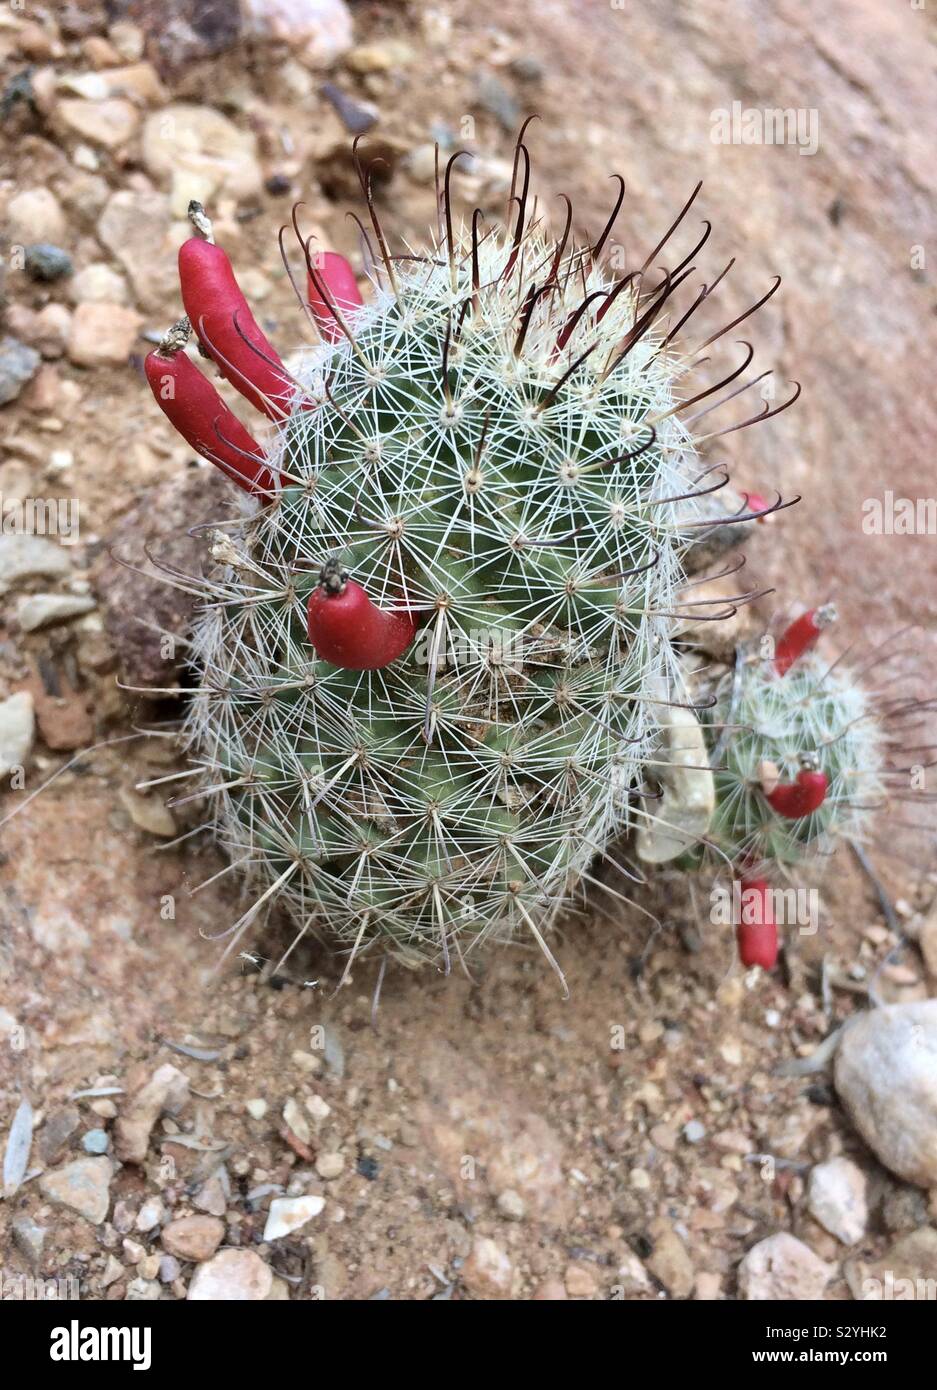 Pin cushion cactus in bloom Stock Photo